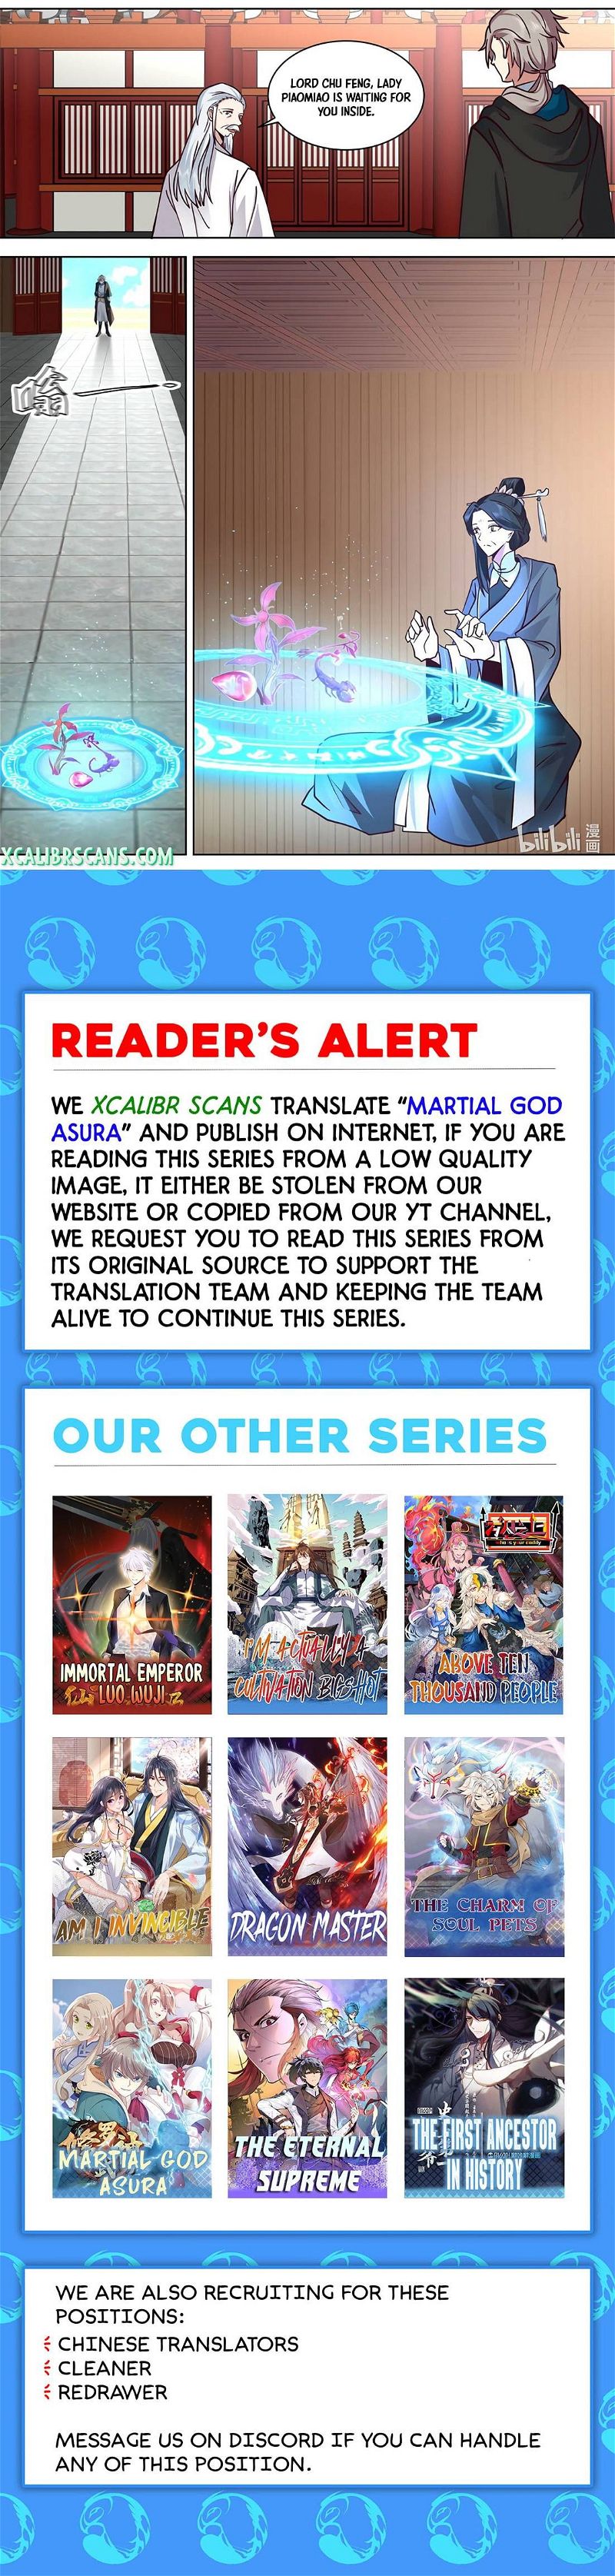 Martial God Asura Chapter 551 page 10